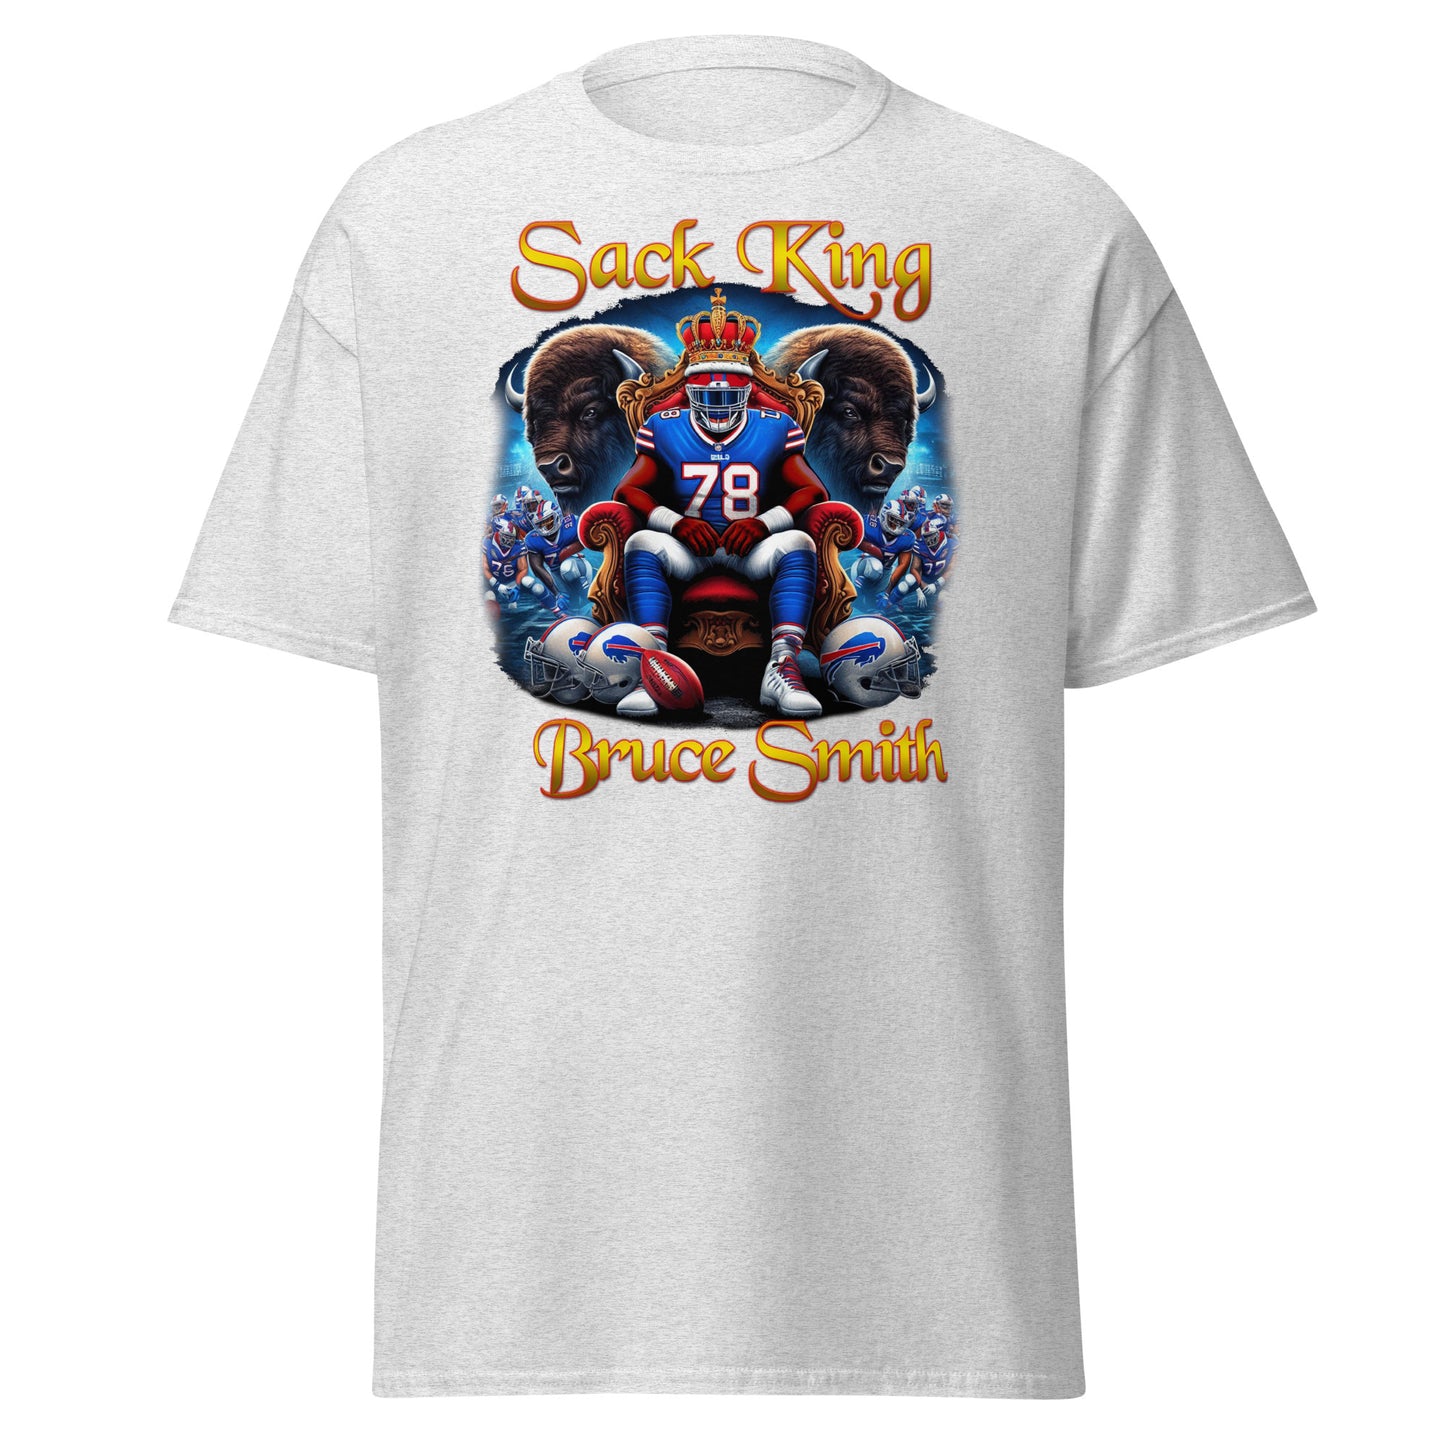 Sack King Bruce Smith T-Shirt - Celebrating Defensive Dominance